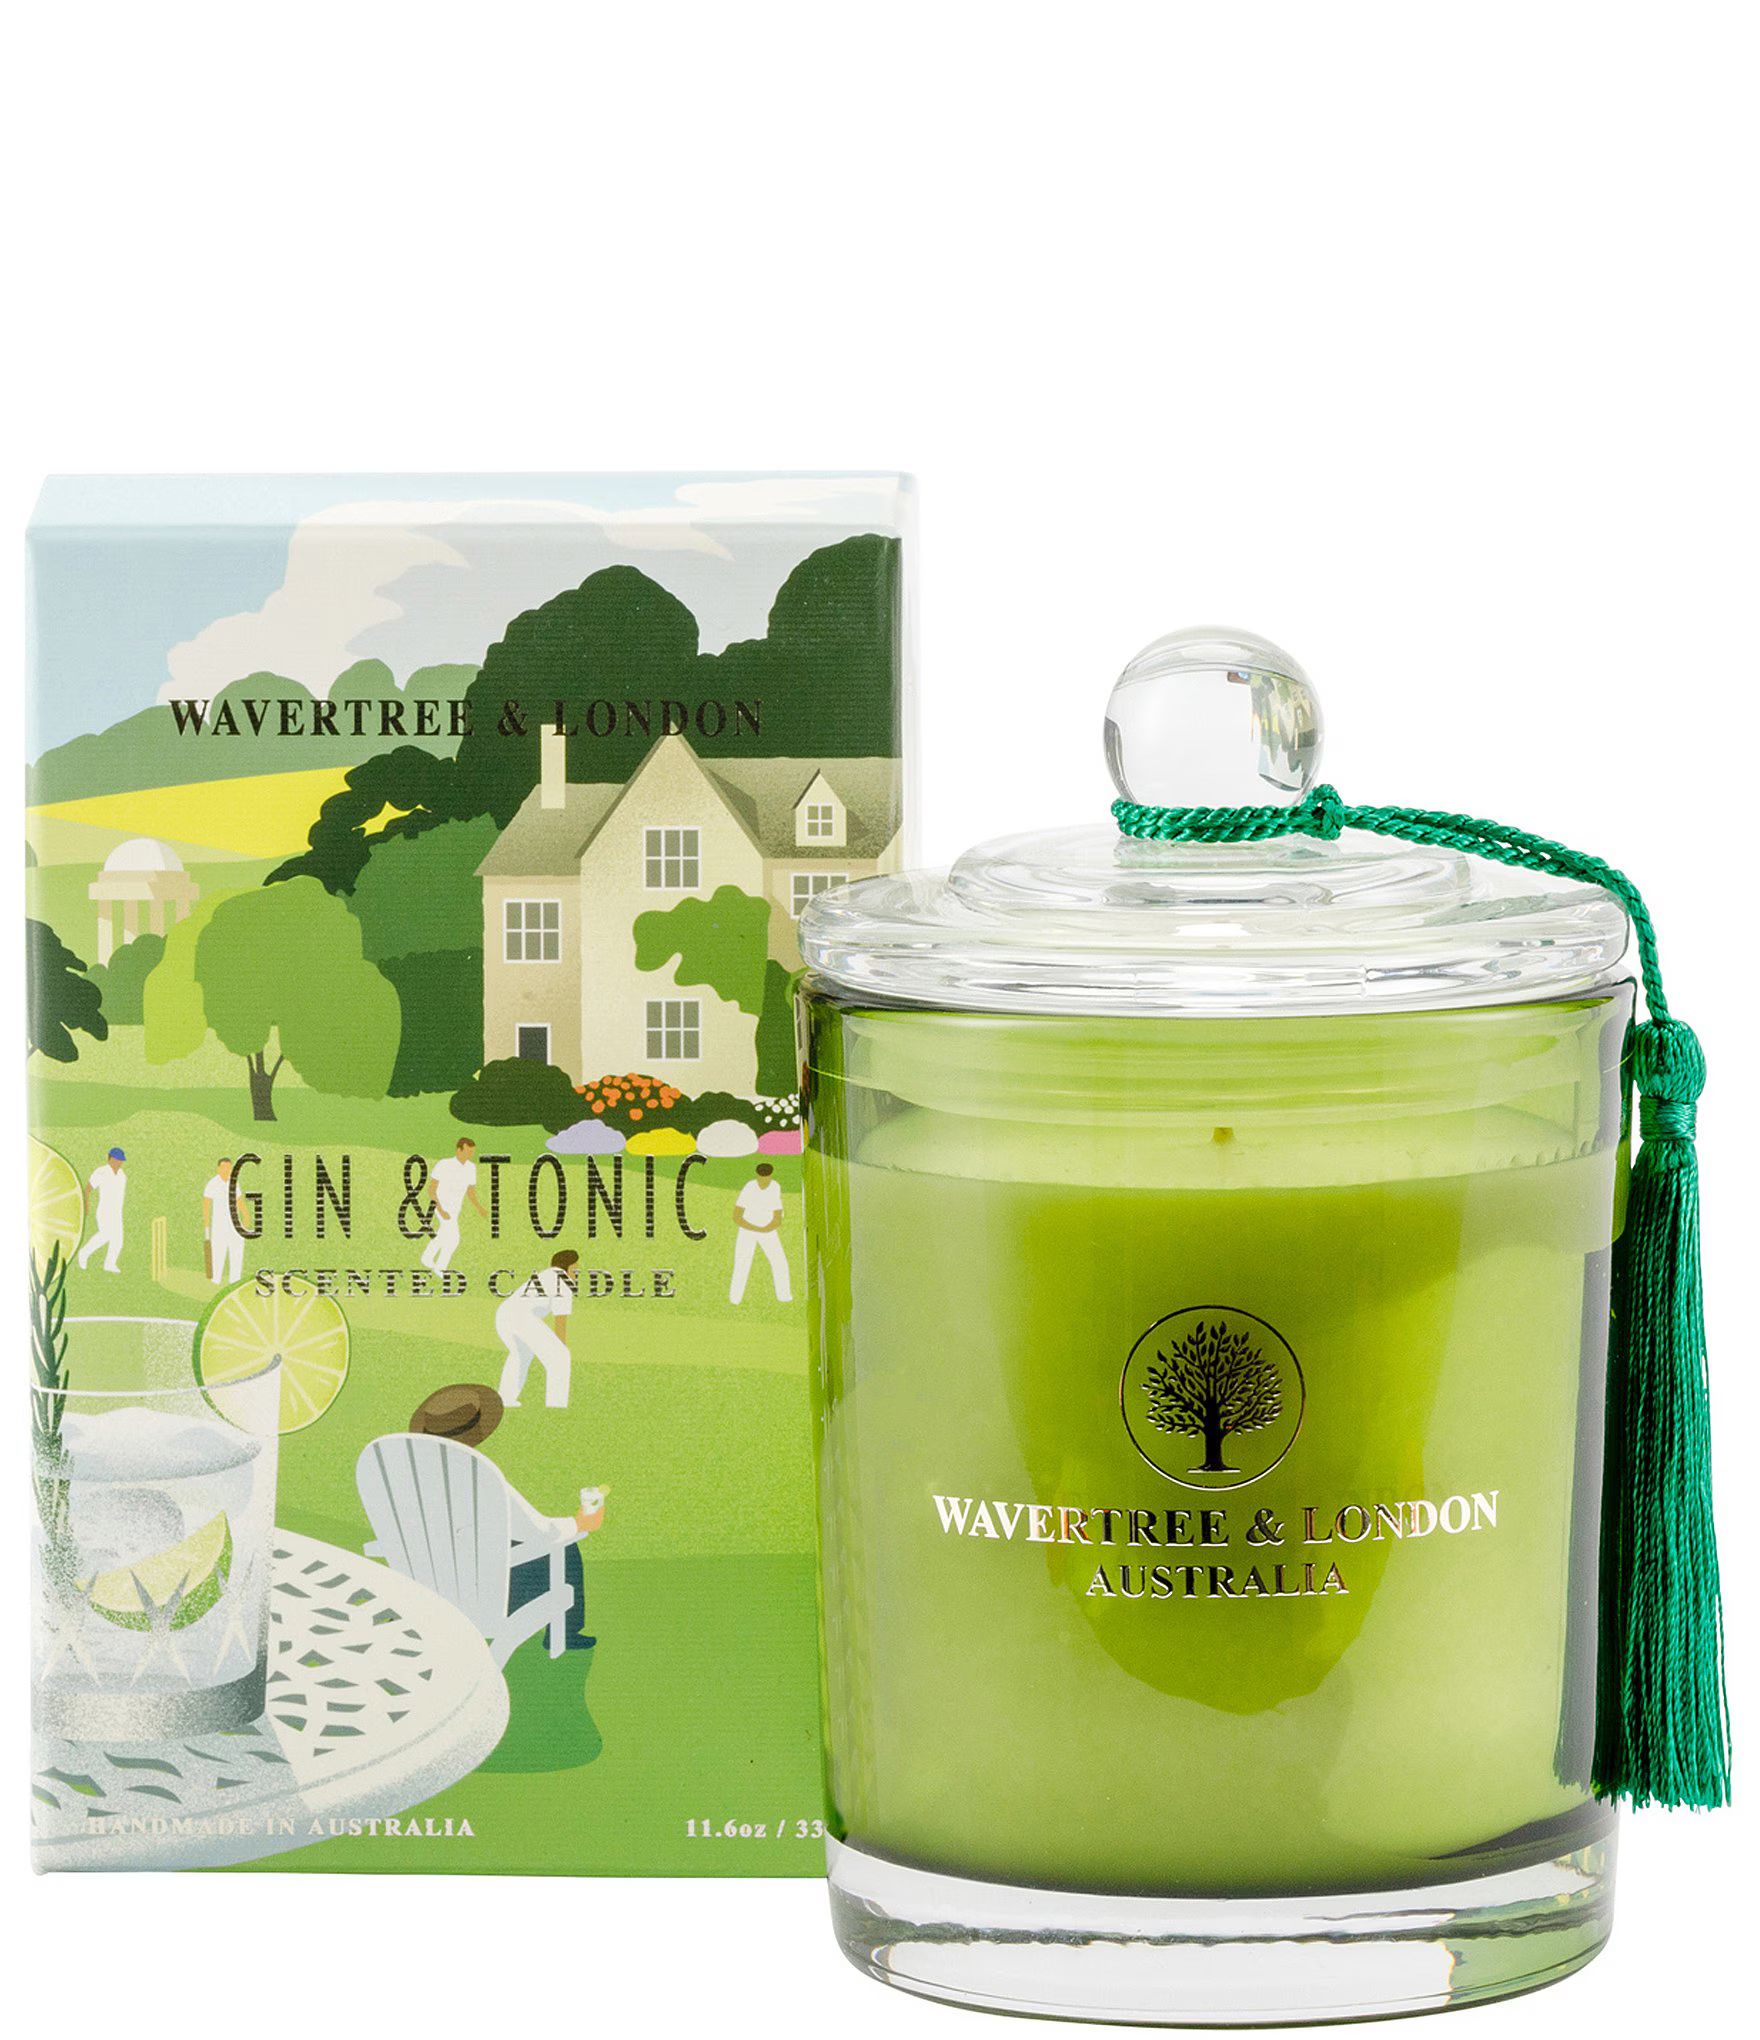 Wavertree & London Gin and Tonic Candle | Dillard's | Dillard's